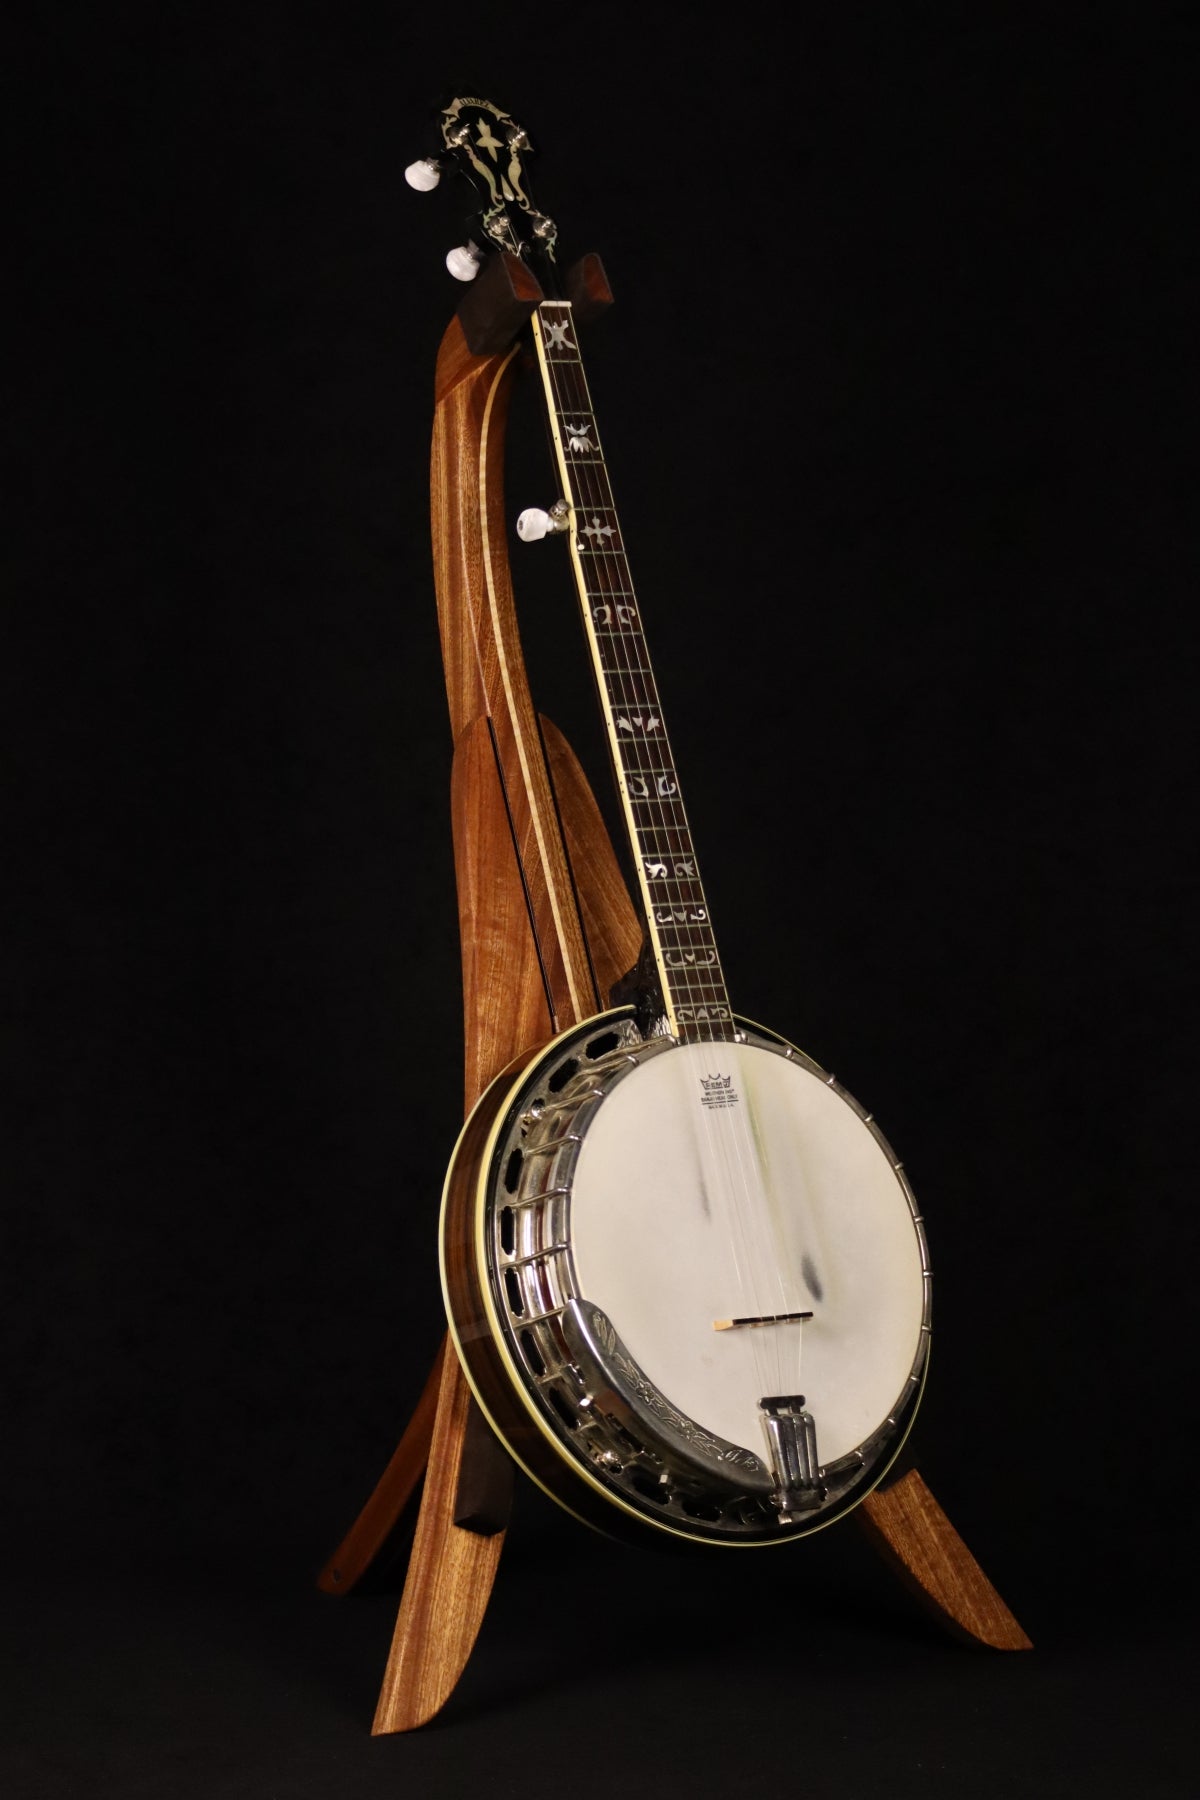 Folding sapele mahogany and curly maple wood banjo floor stand full front image with Alvarez banjo